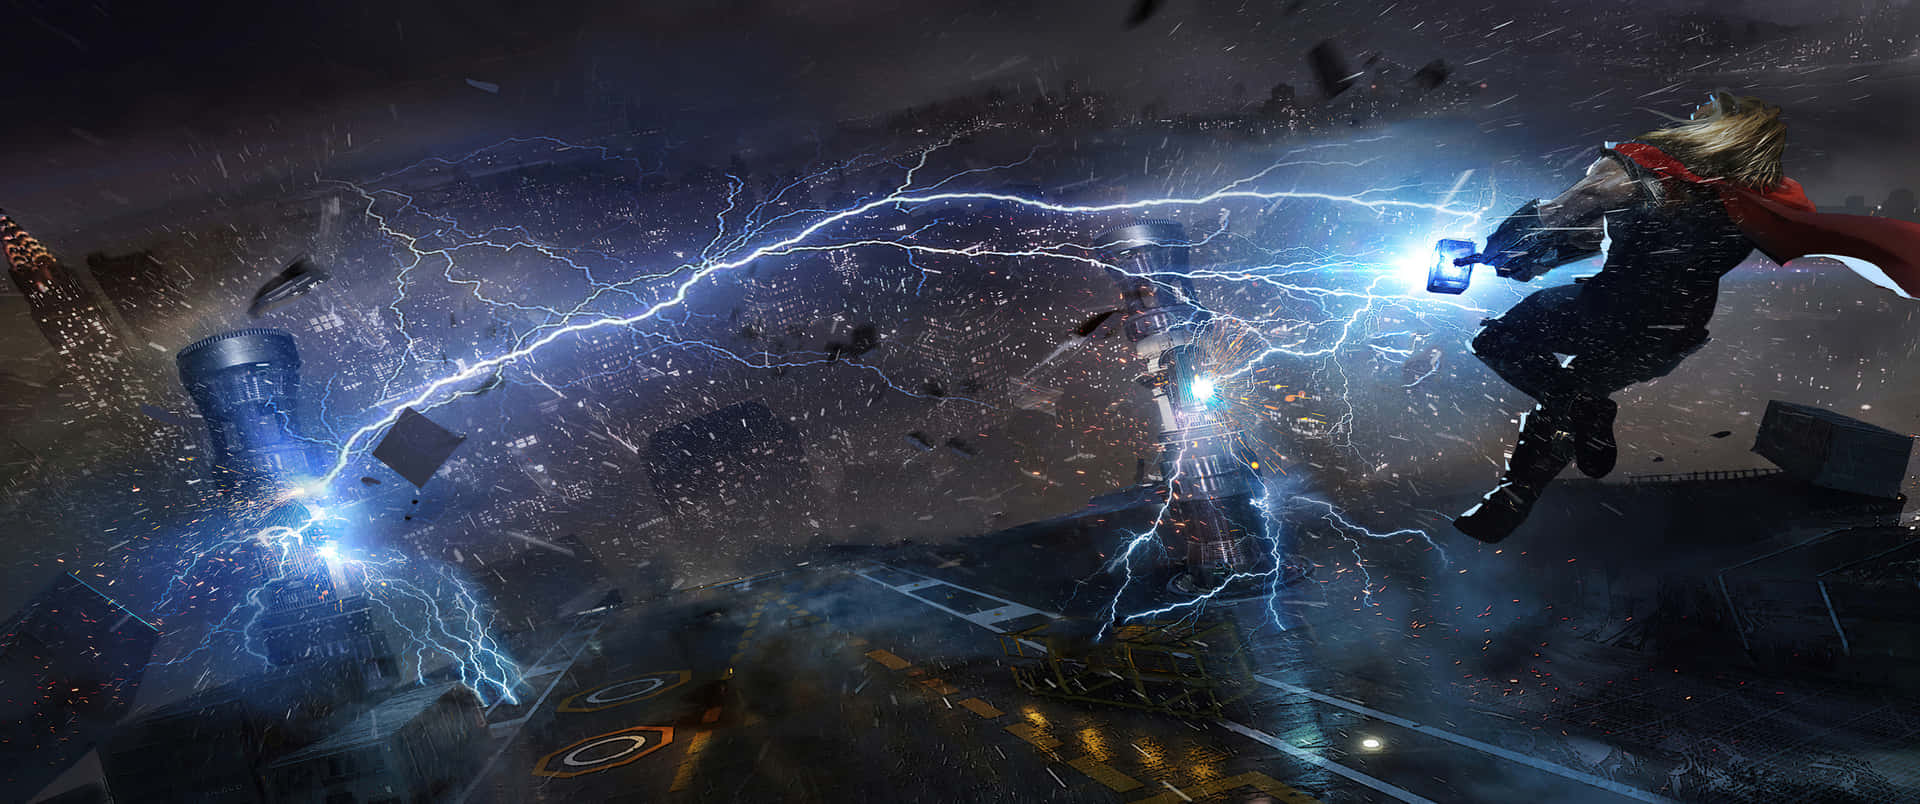 Thor Hammer Lightning Marvel 3440x1440 Wallpaper